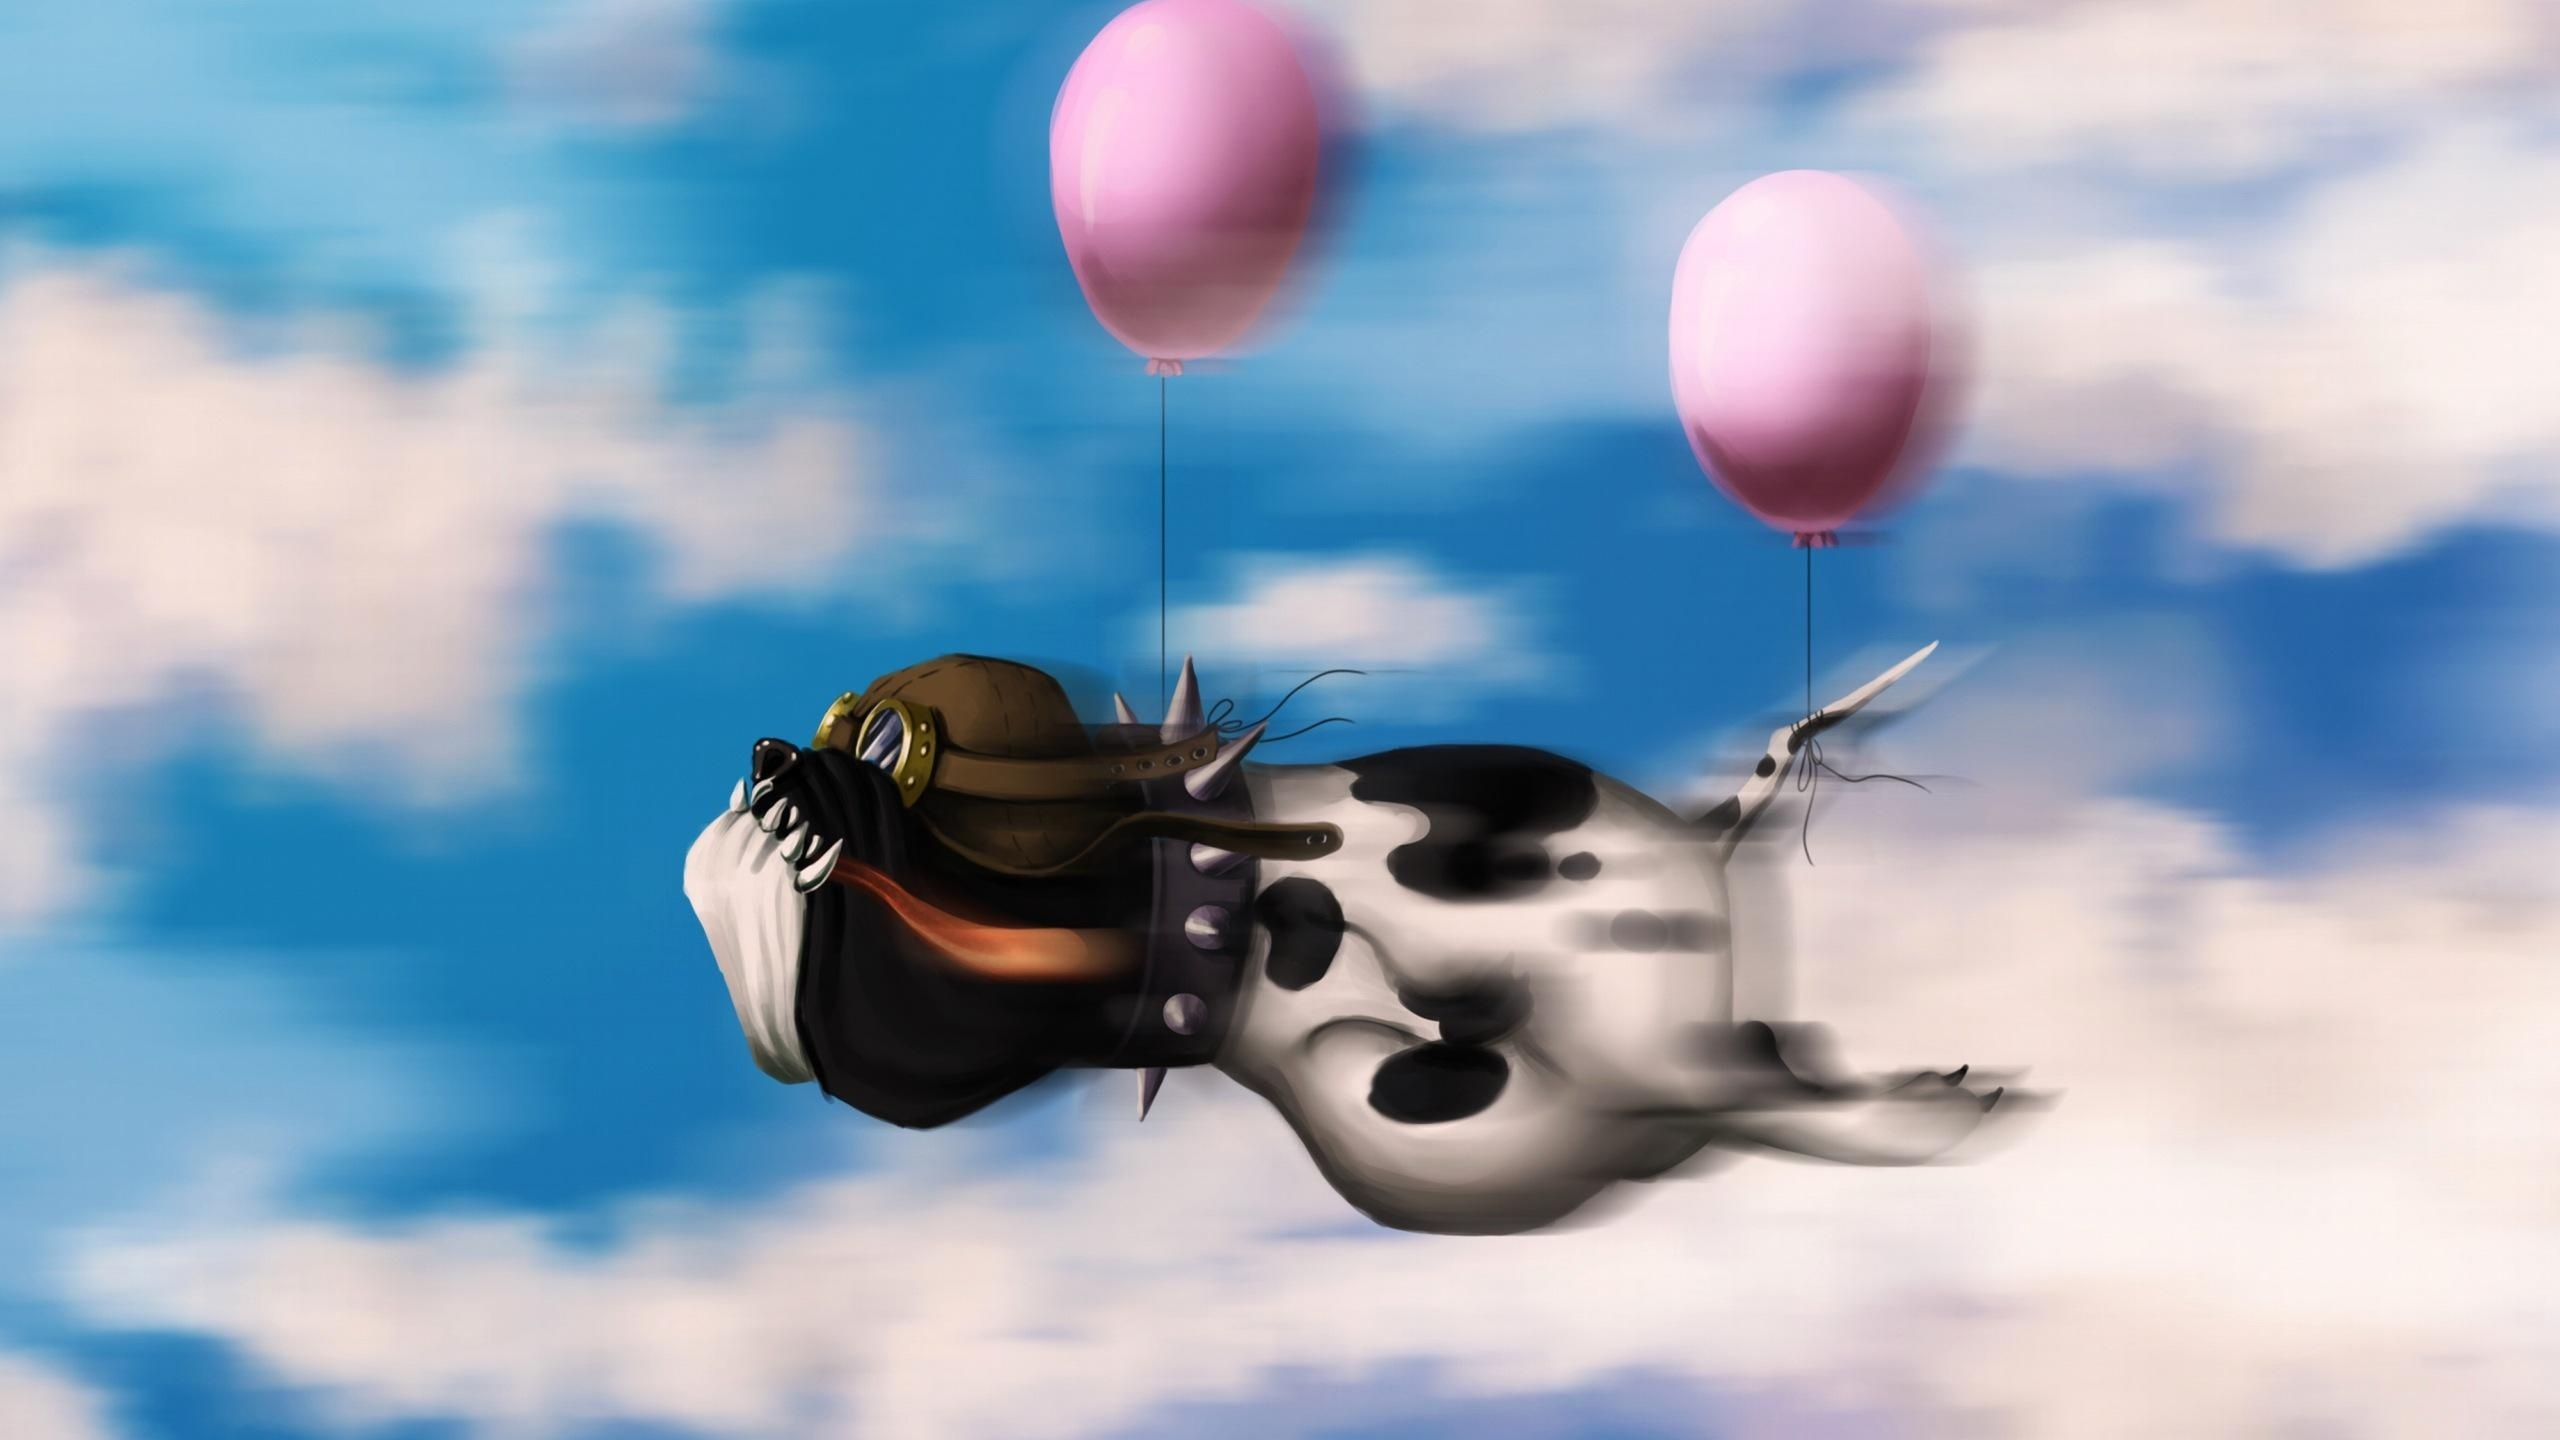 небо, облака, полёт, собака, воздушные шары, пилот